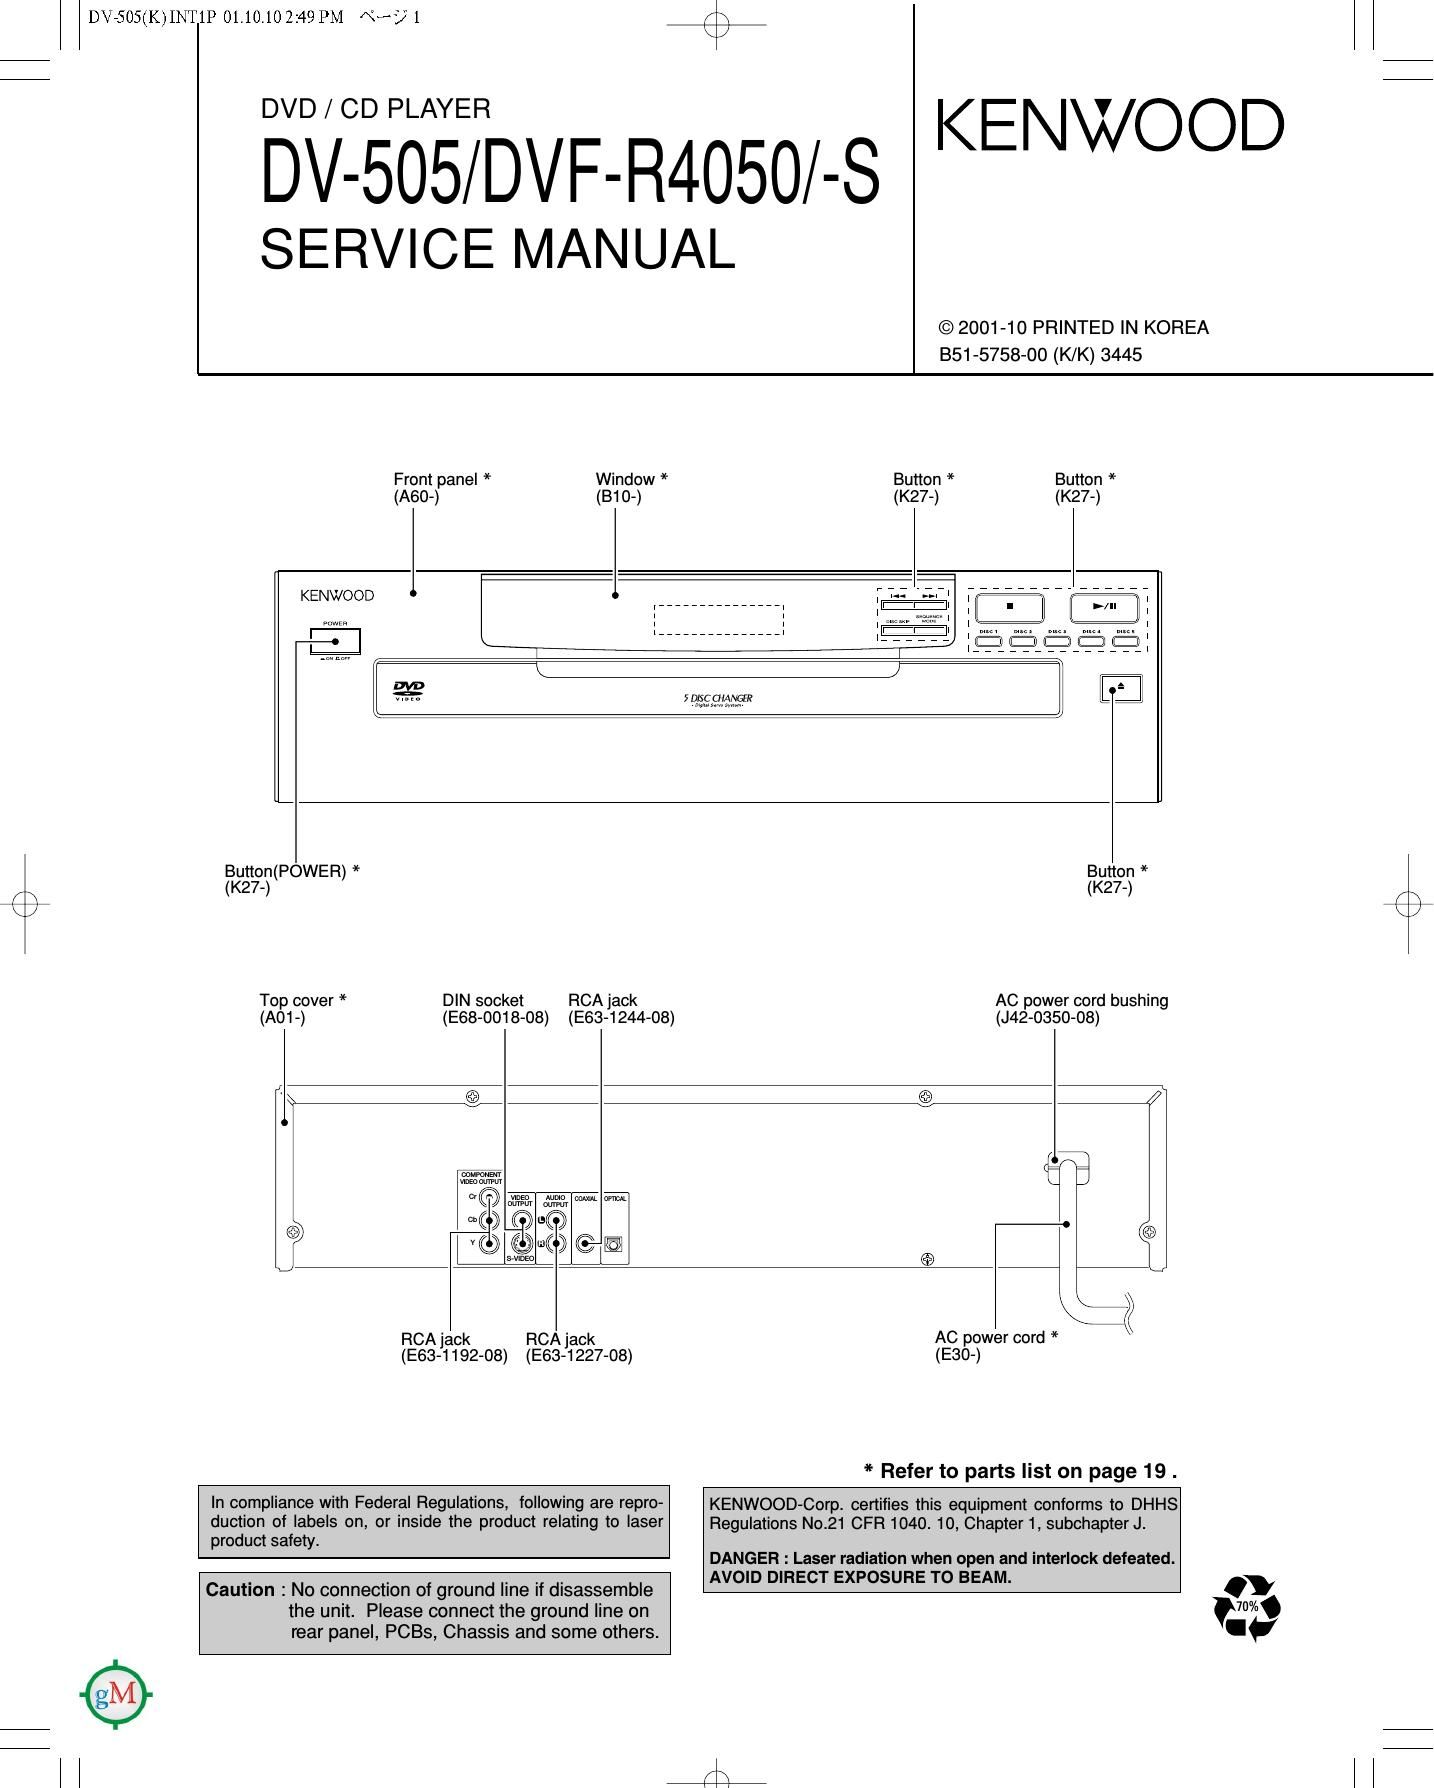 Kenwood DVFR 4050 Service Manual